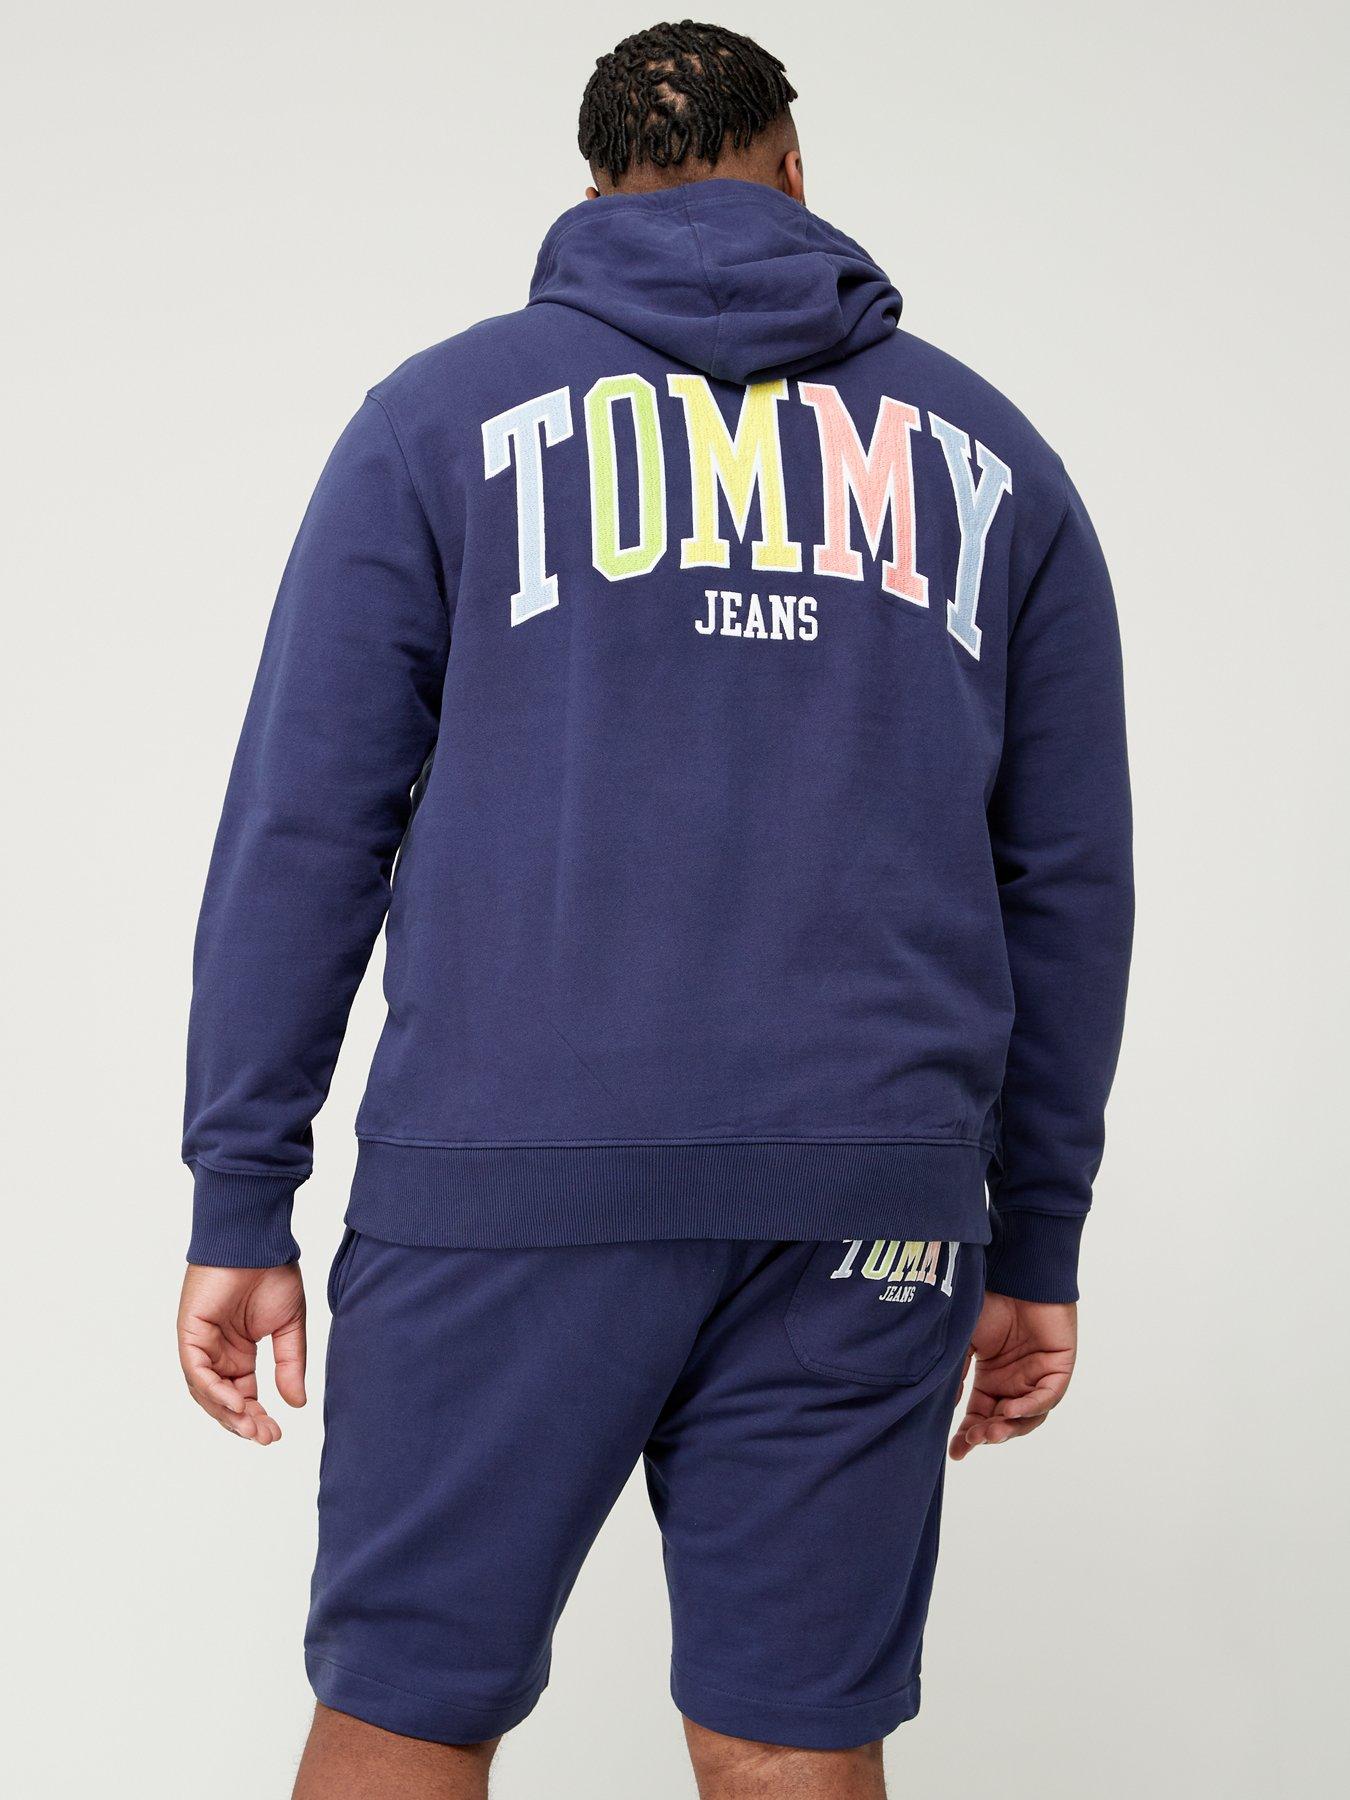 3XL | Tommy jeans | Hoodies & sweatshirts | Men | Very Ireland